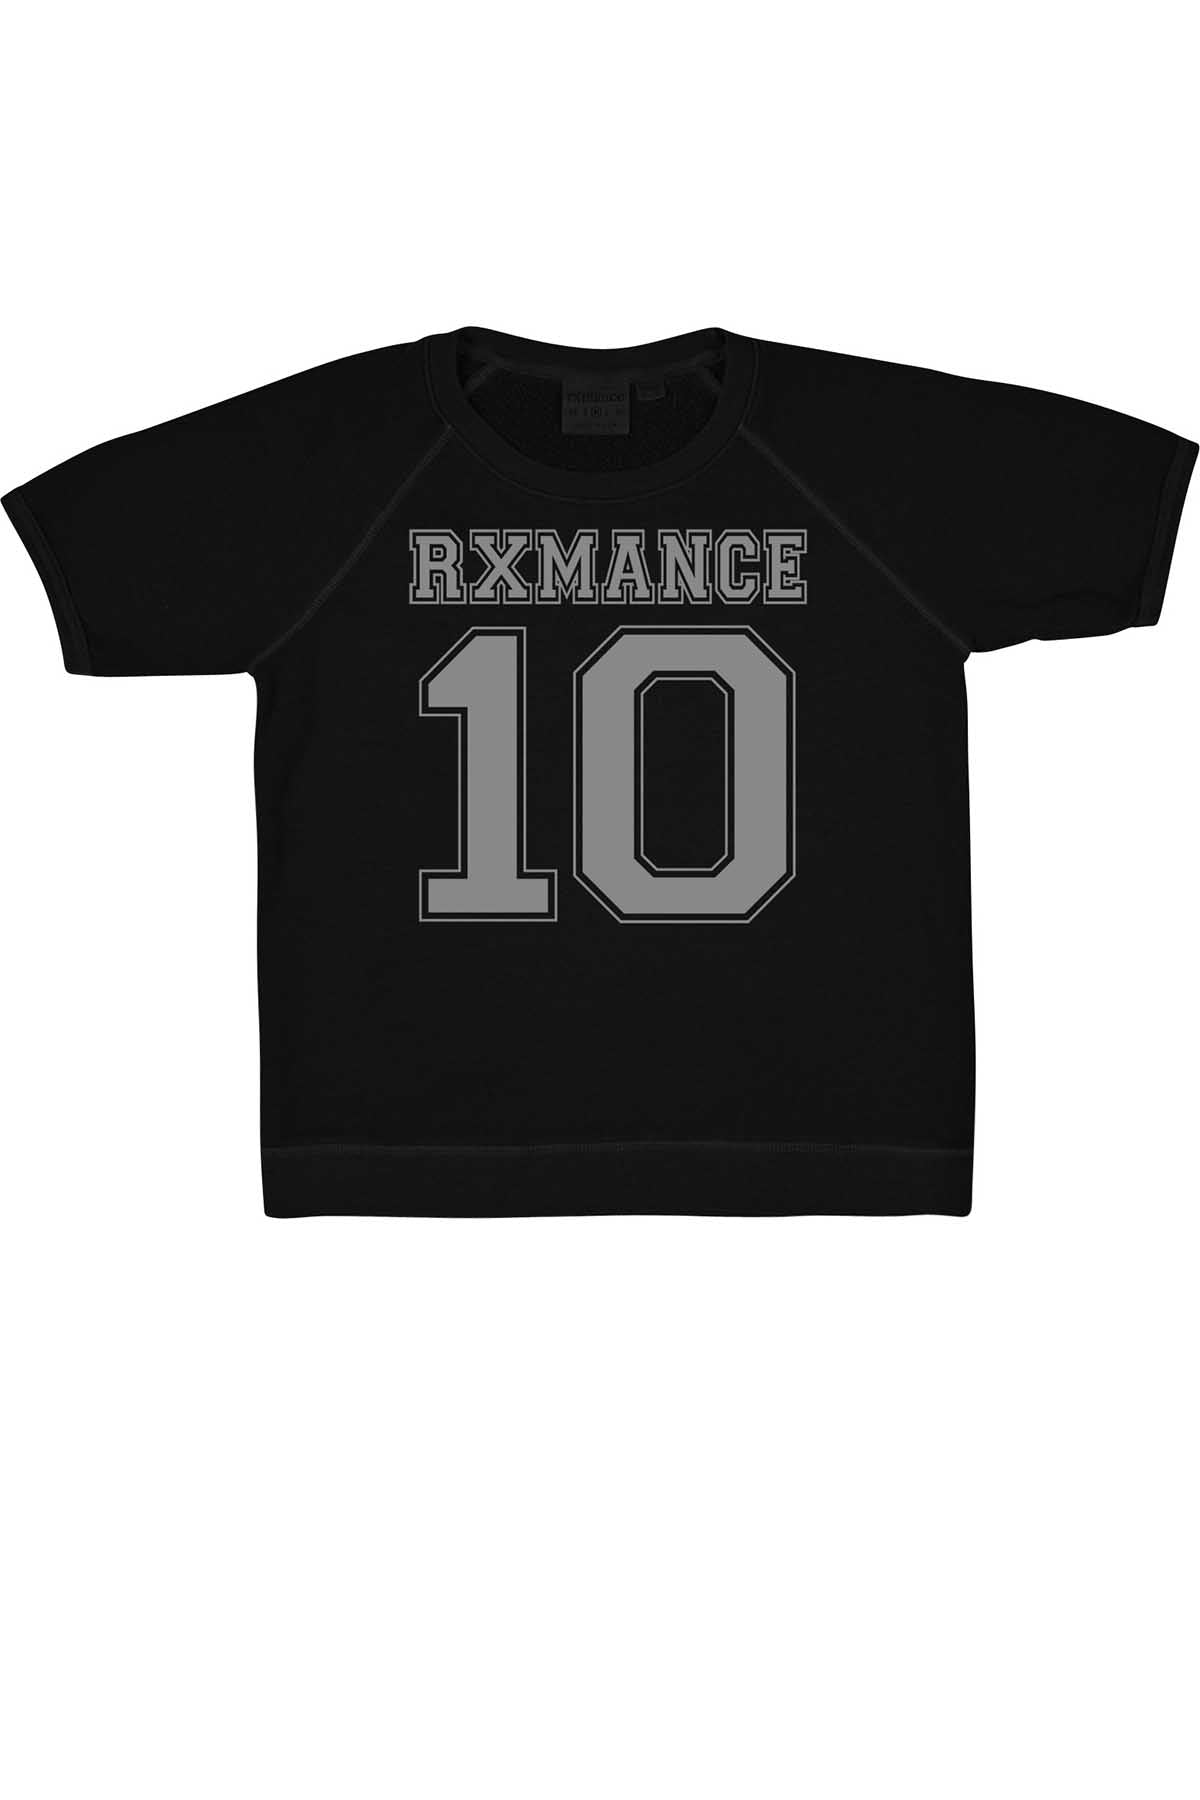 Rxmance Black Jersey Short Sleeve Sweatshirt